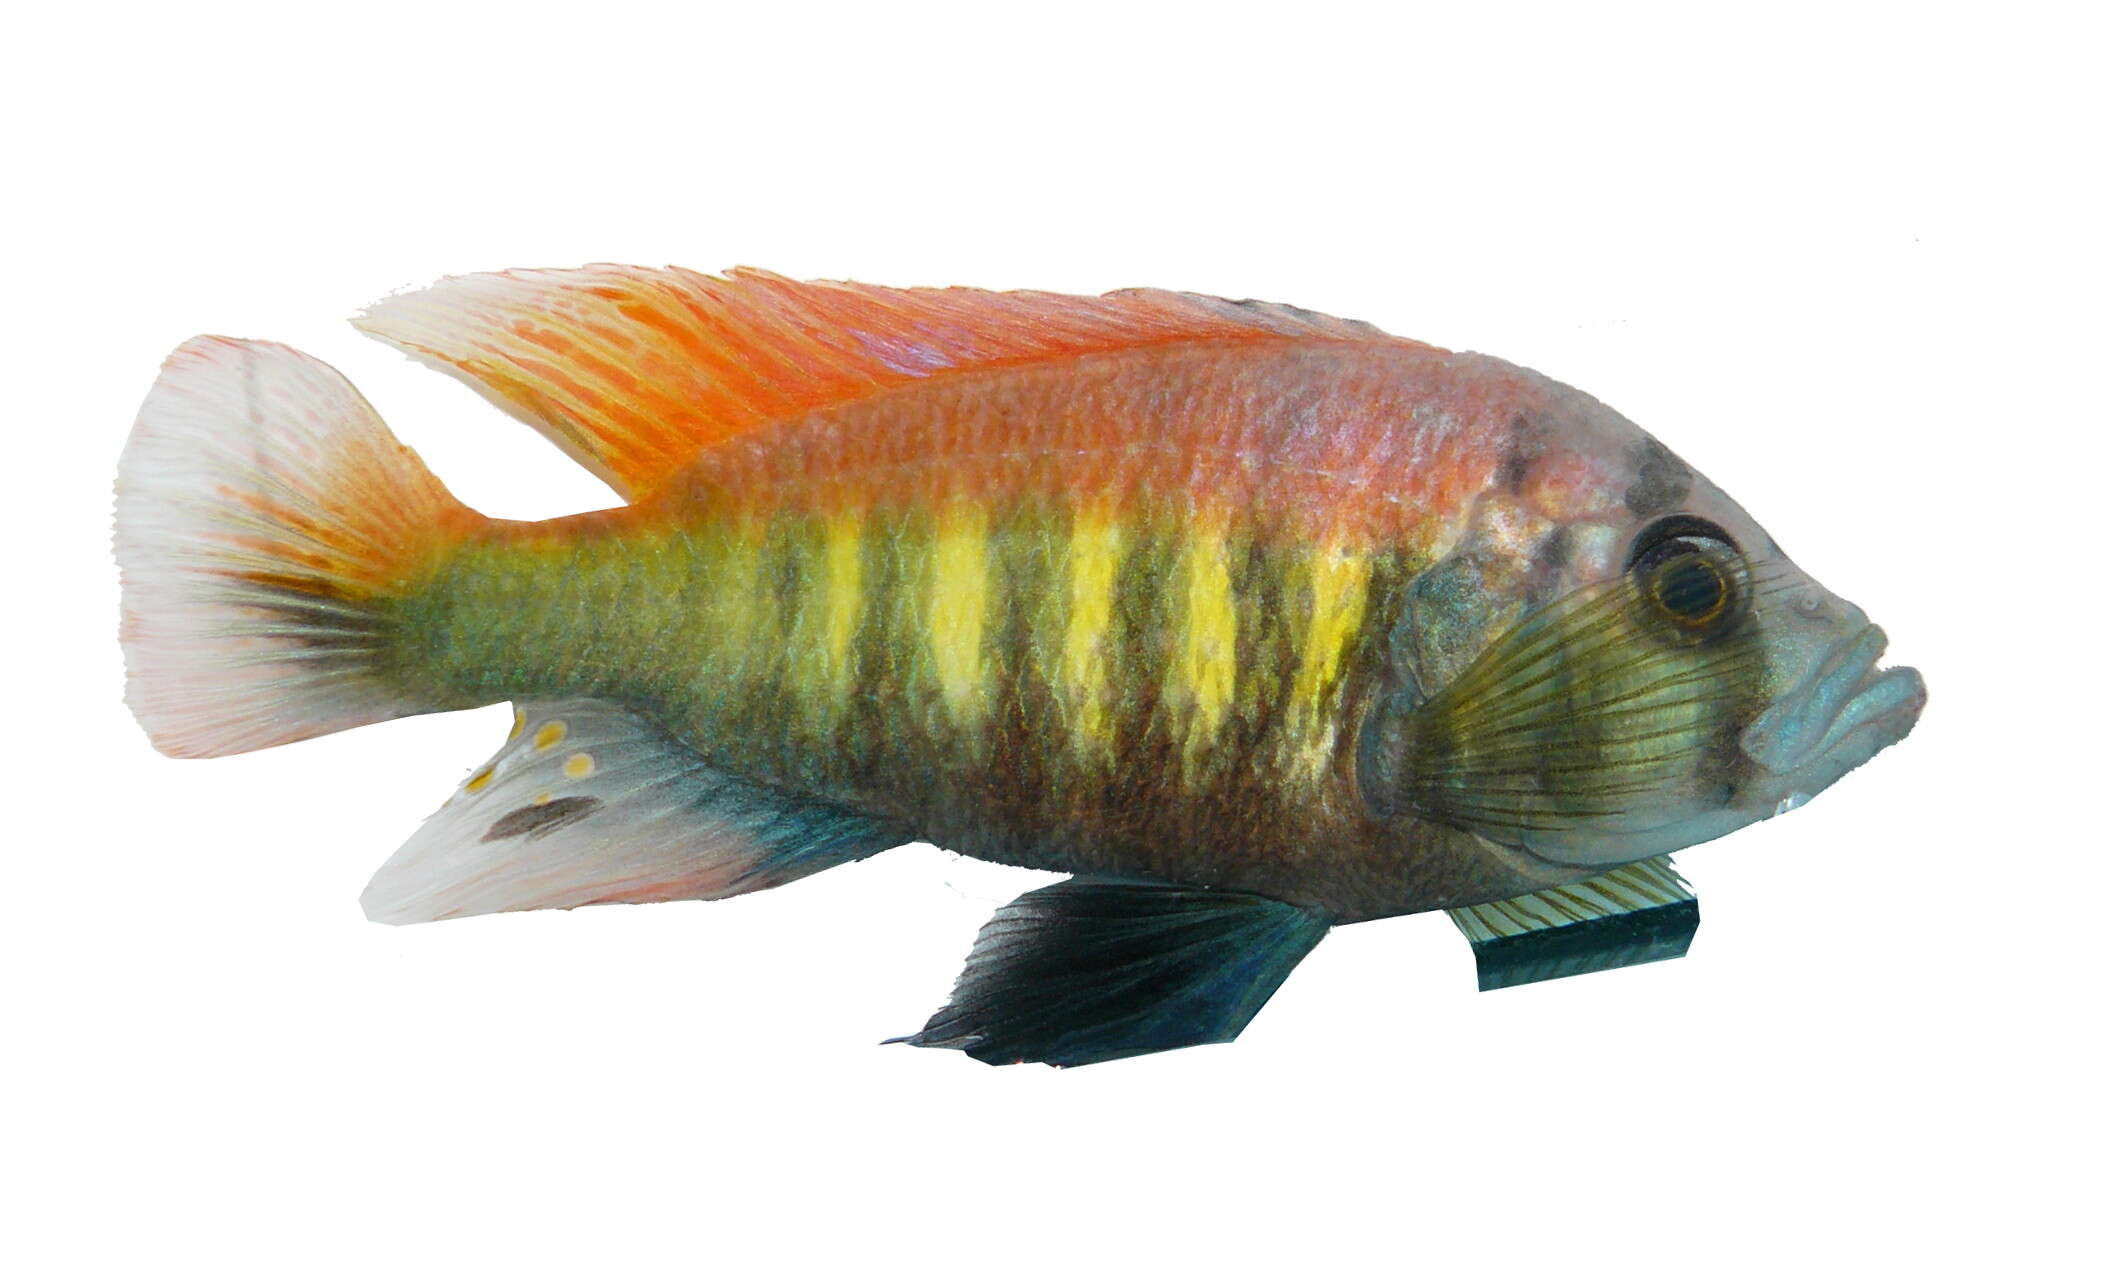 Image of Haplochromis nyererei Witte-Maas & Witte 1985